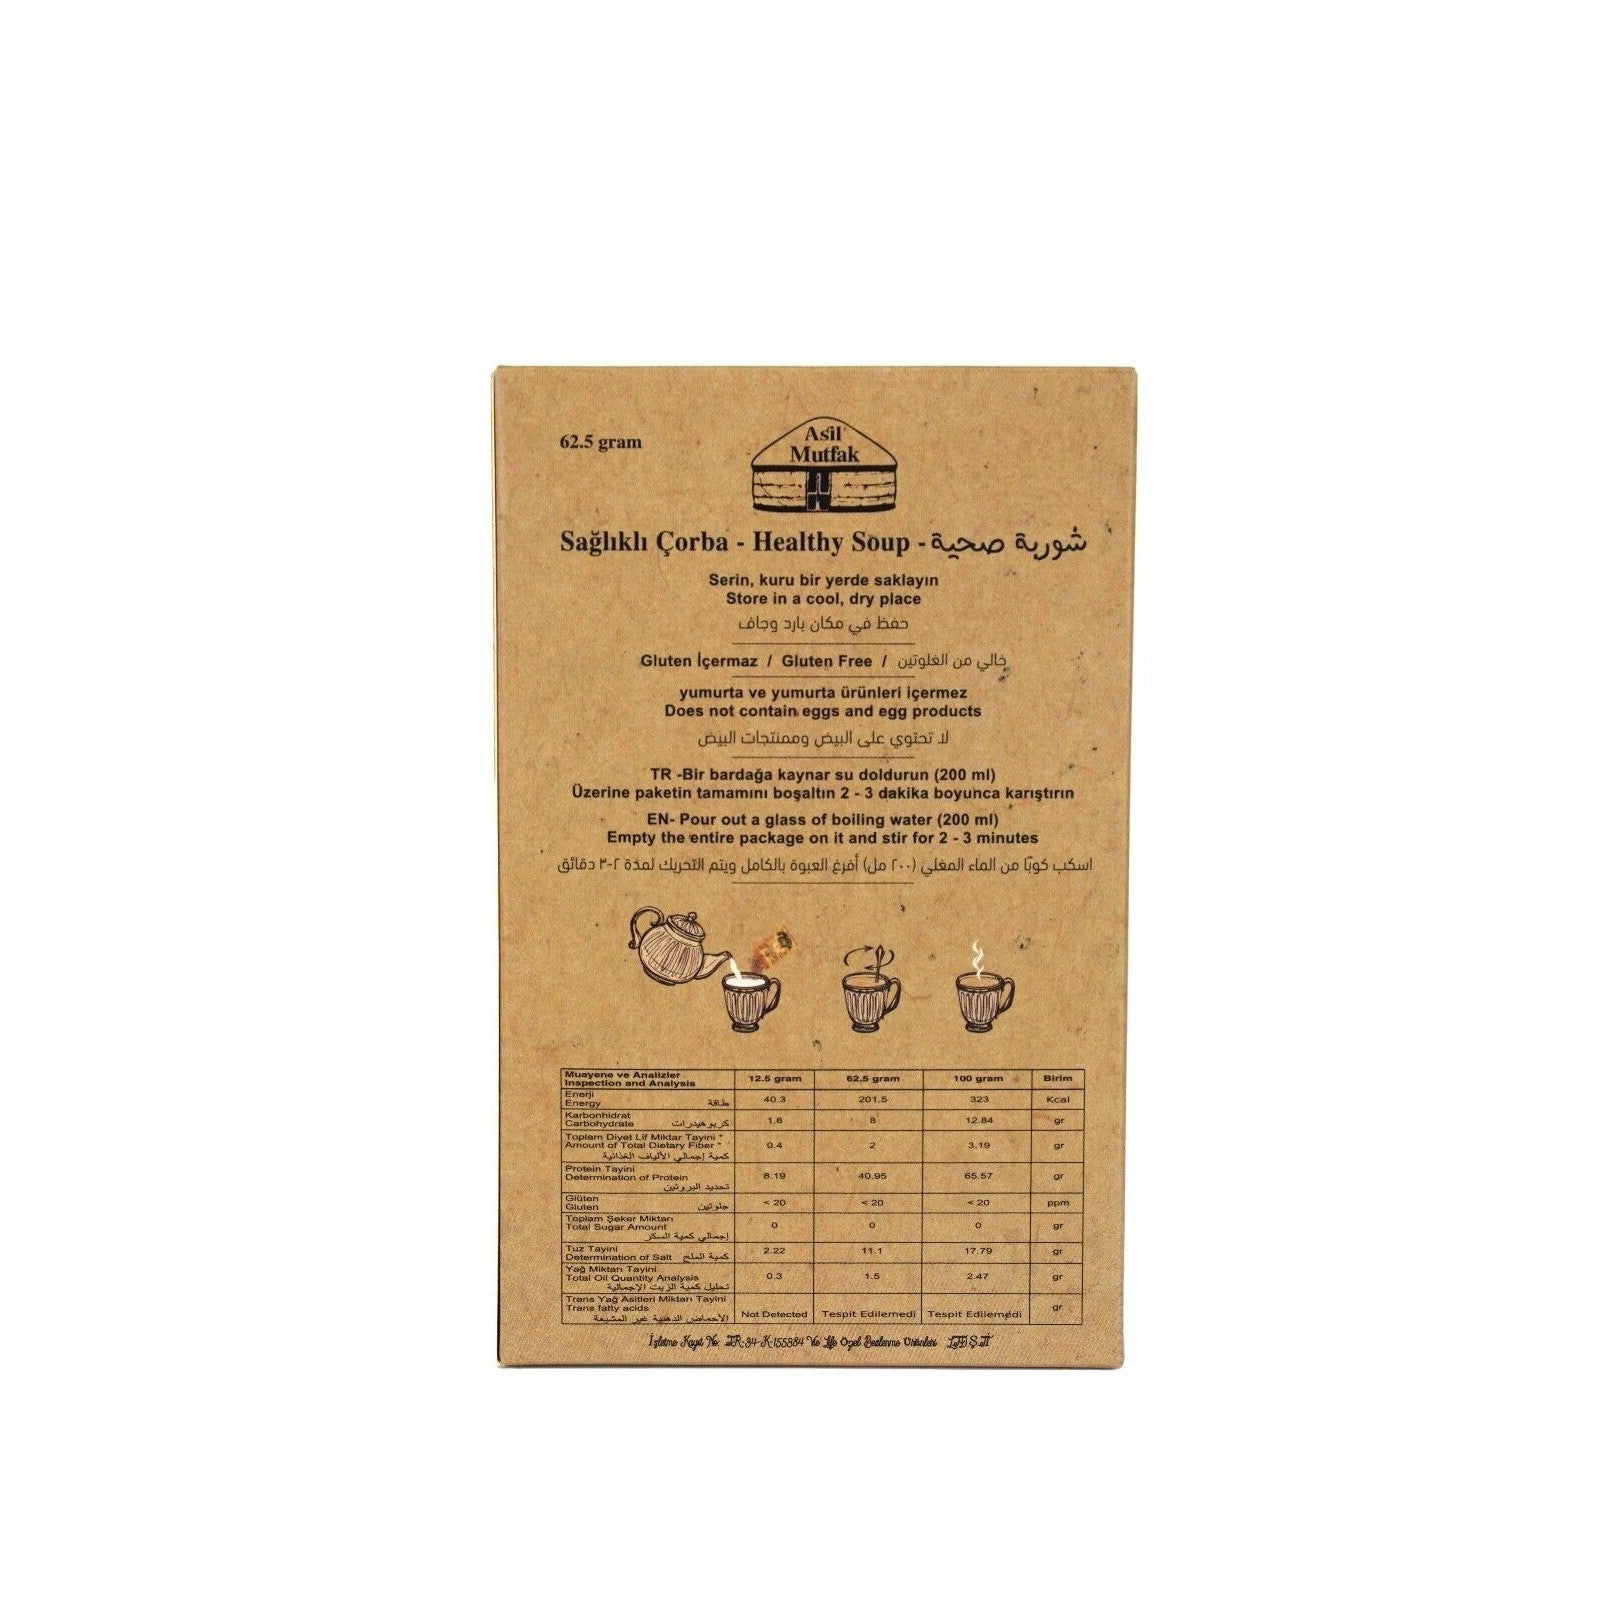 Asil Mutfak Bone Broth Soup Original Spicy 100% Natural Collagen Halal Certified Gluten Free Keto Low Carb 5 Packets